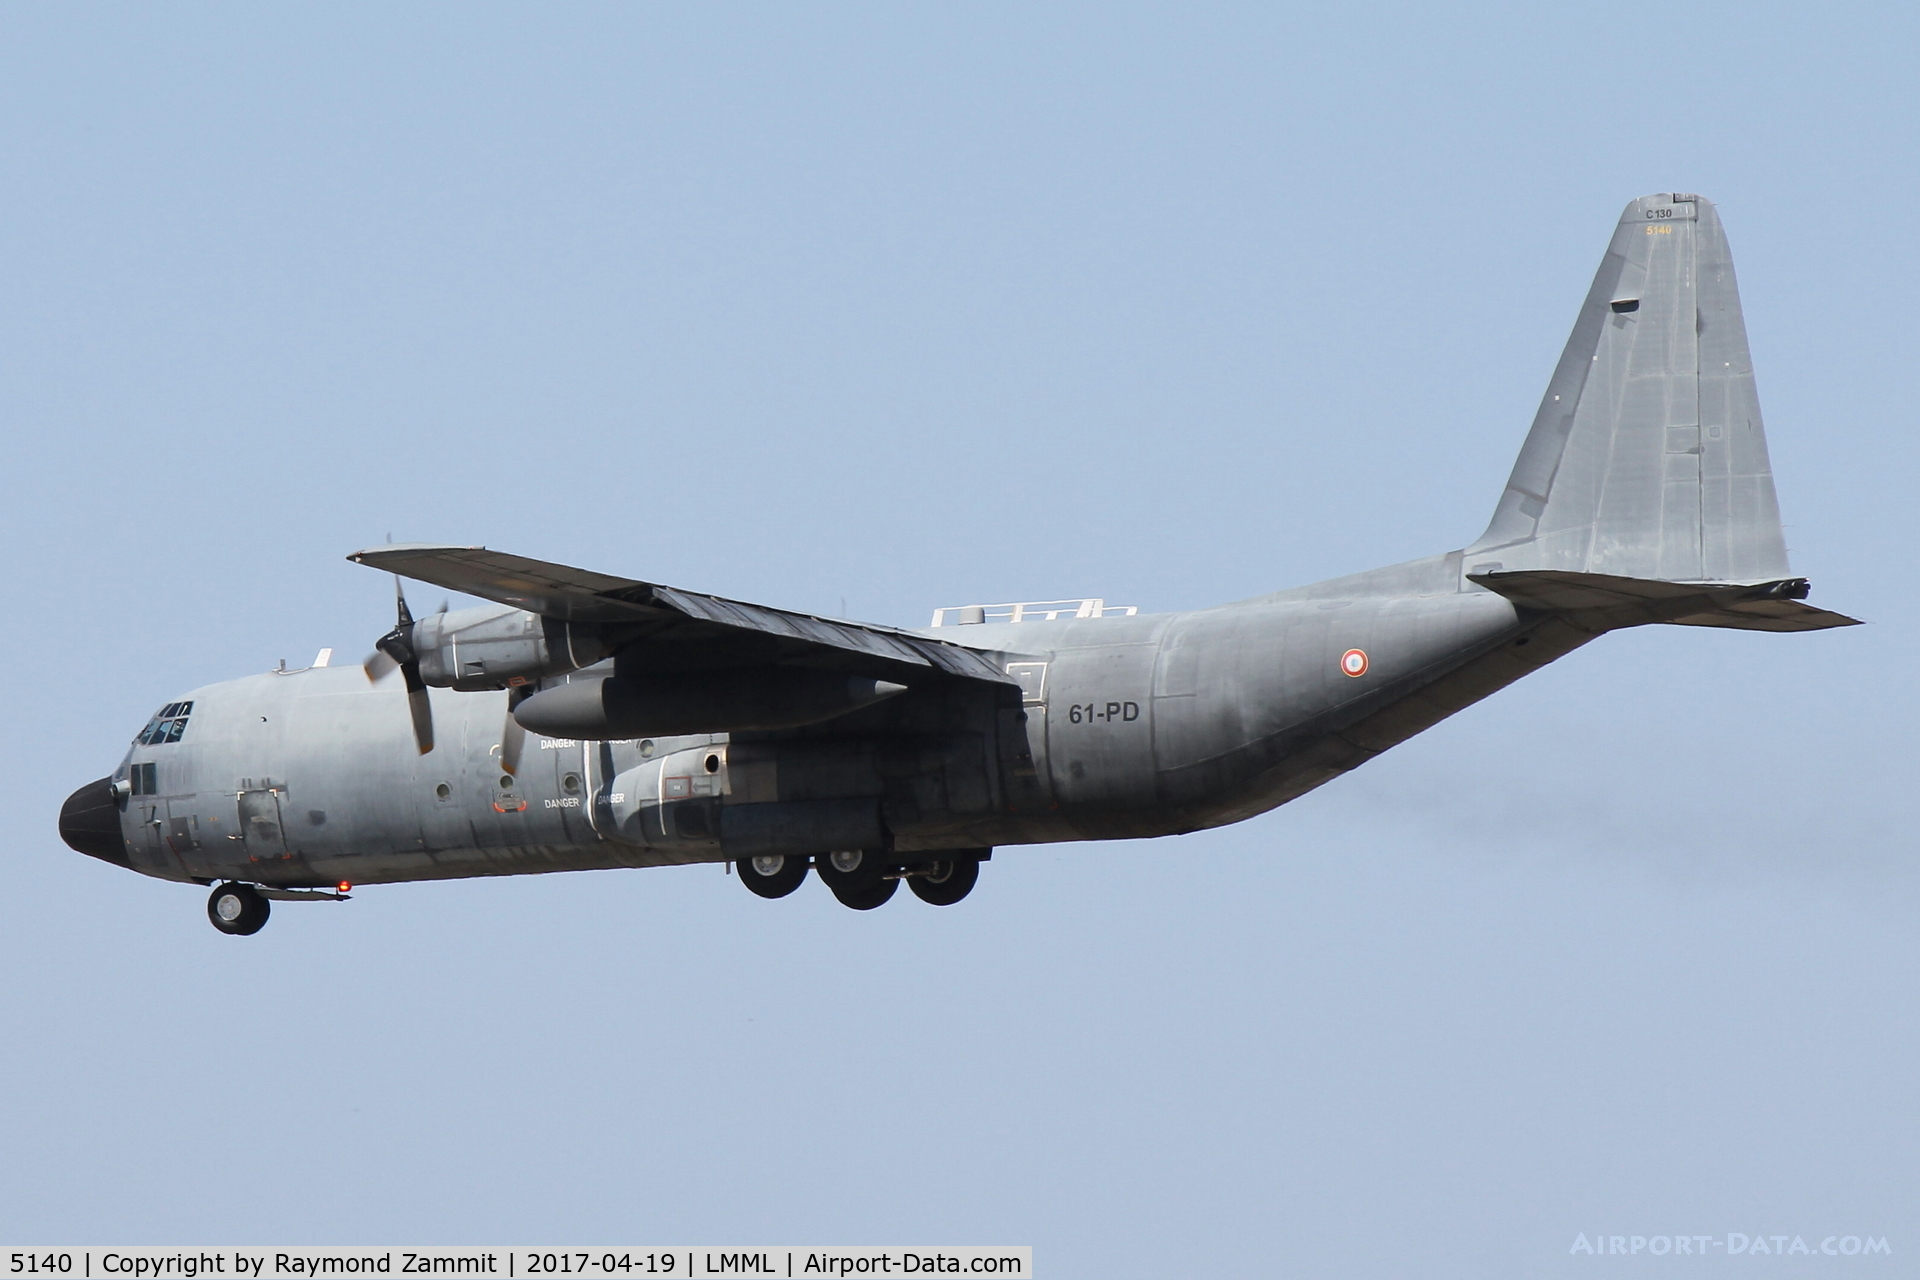 5140, 1988 Lockheed C-130H Hercules C/N 382-5140, Lockheed C-130H Hercules 5140/61-PD French Air Force